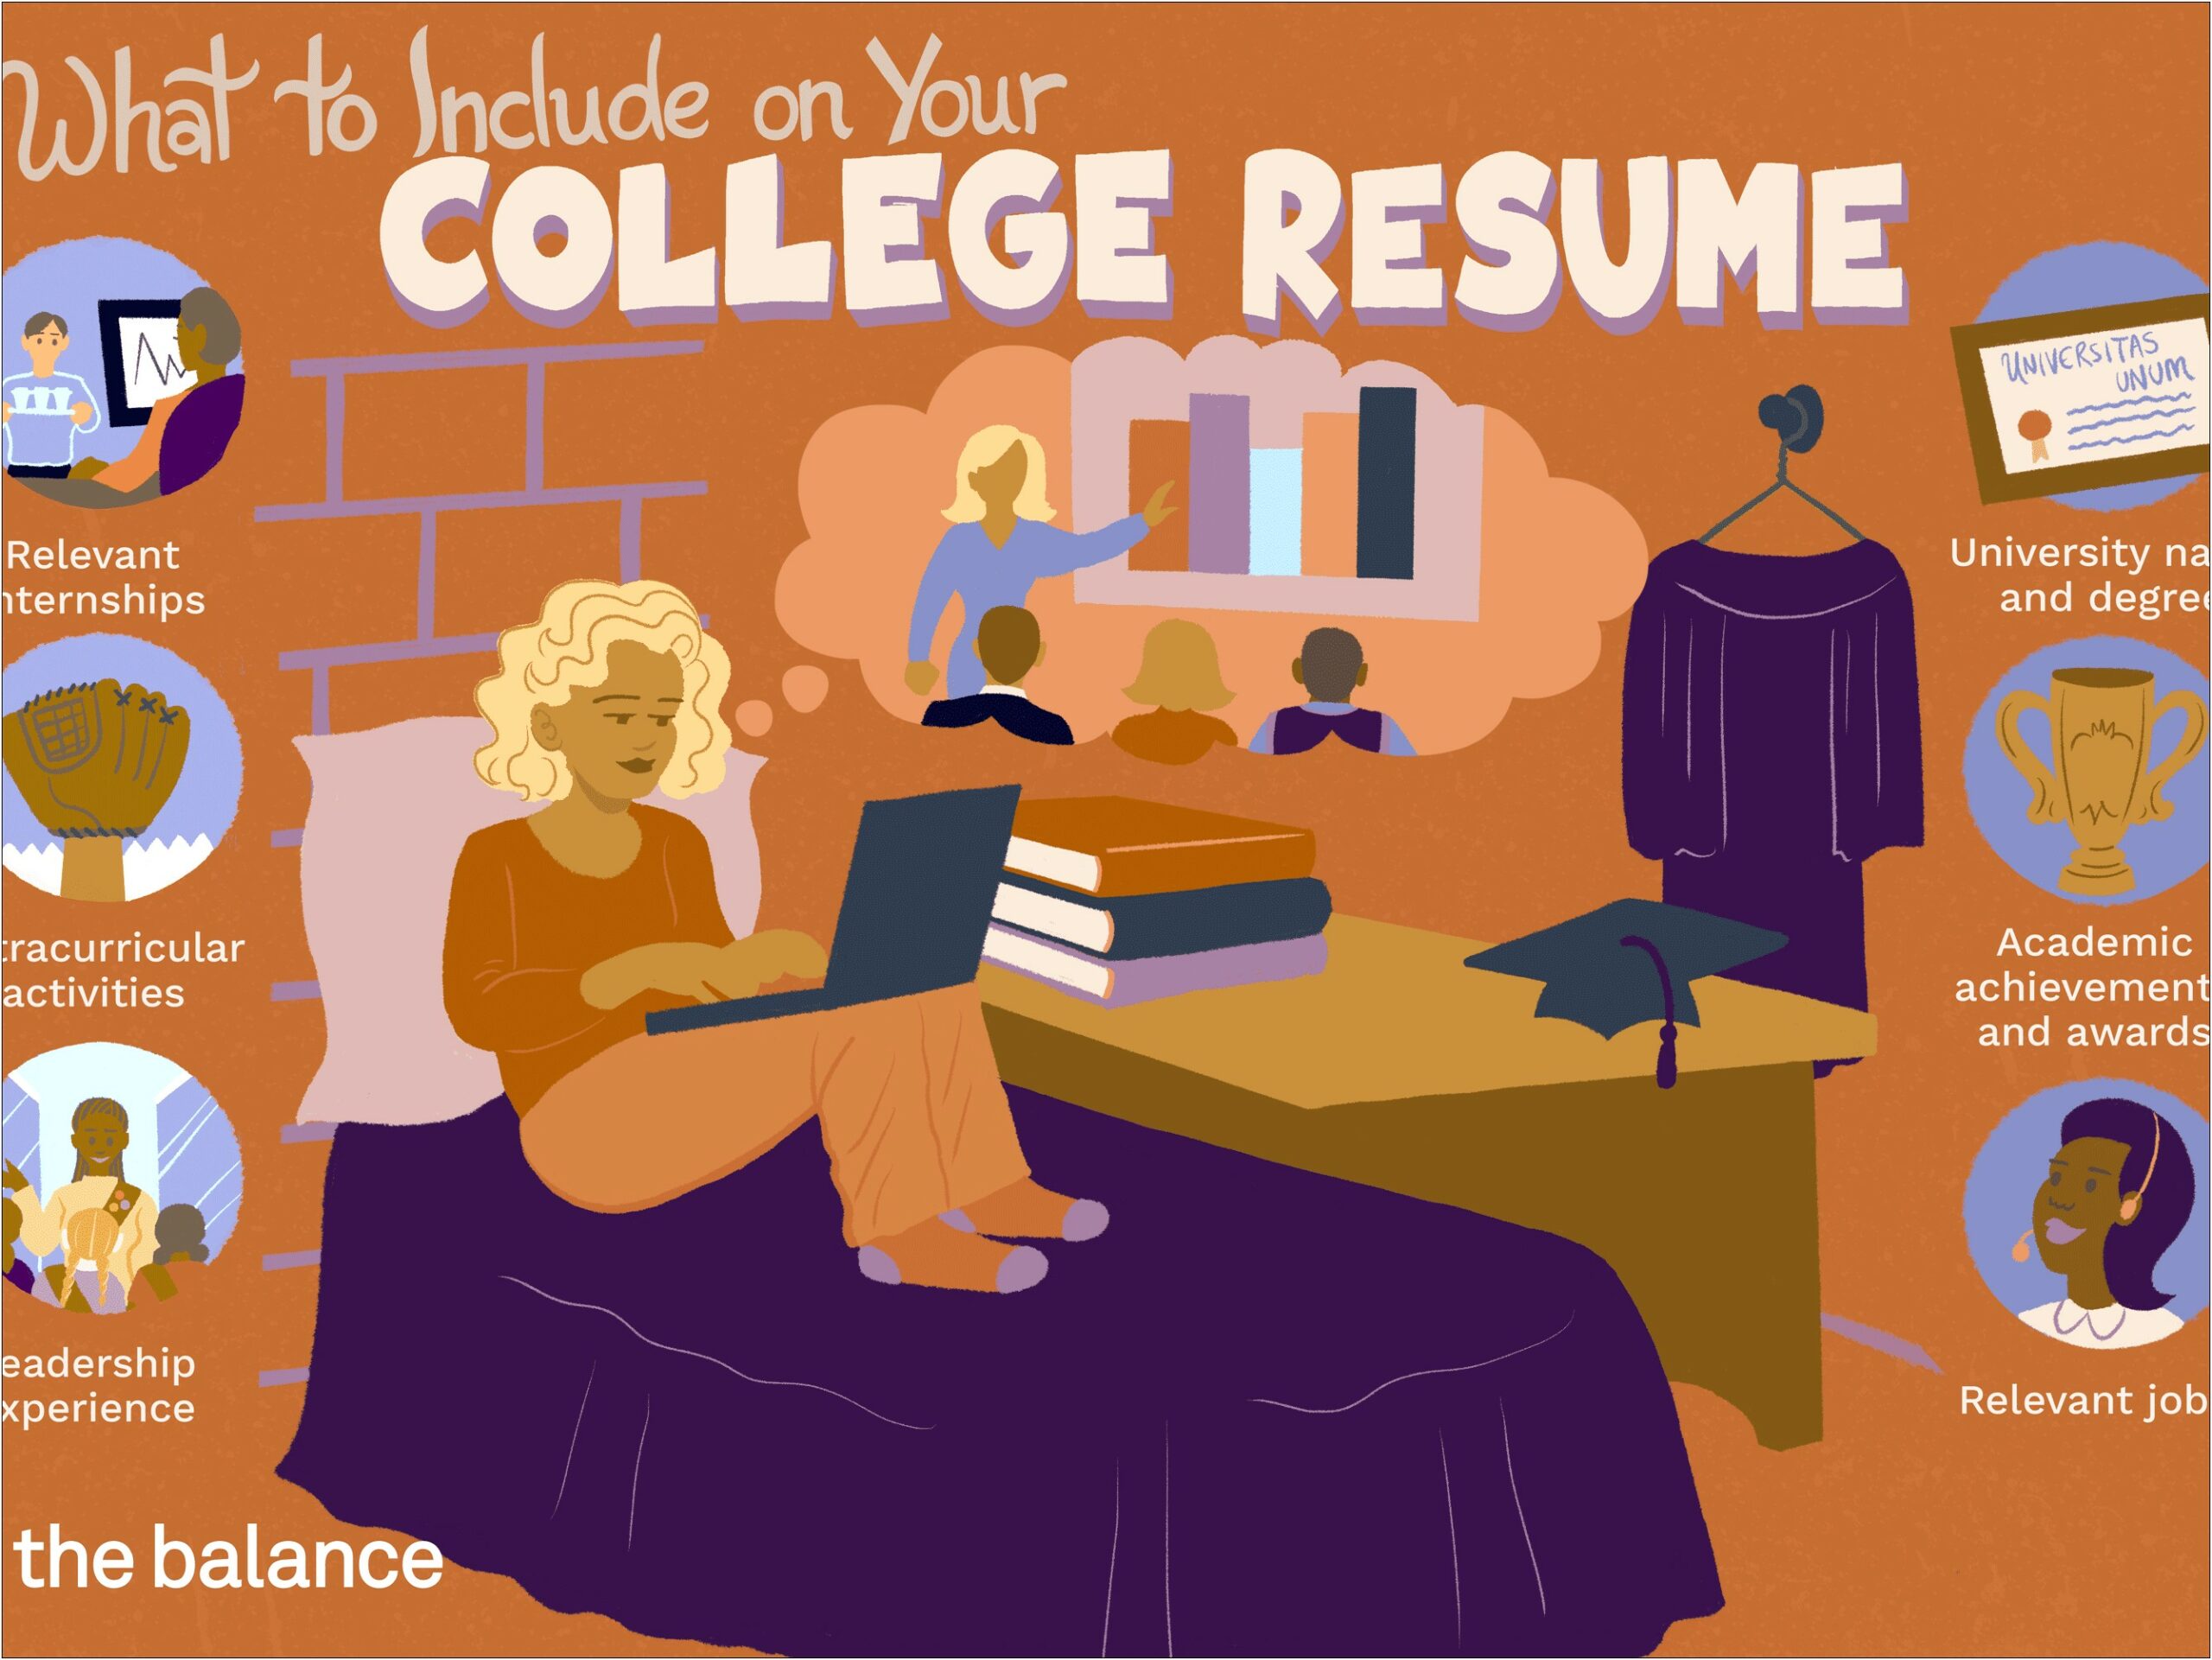 Recen College Graduates Summary Resume Examples